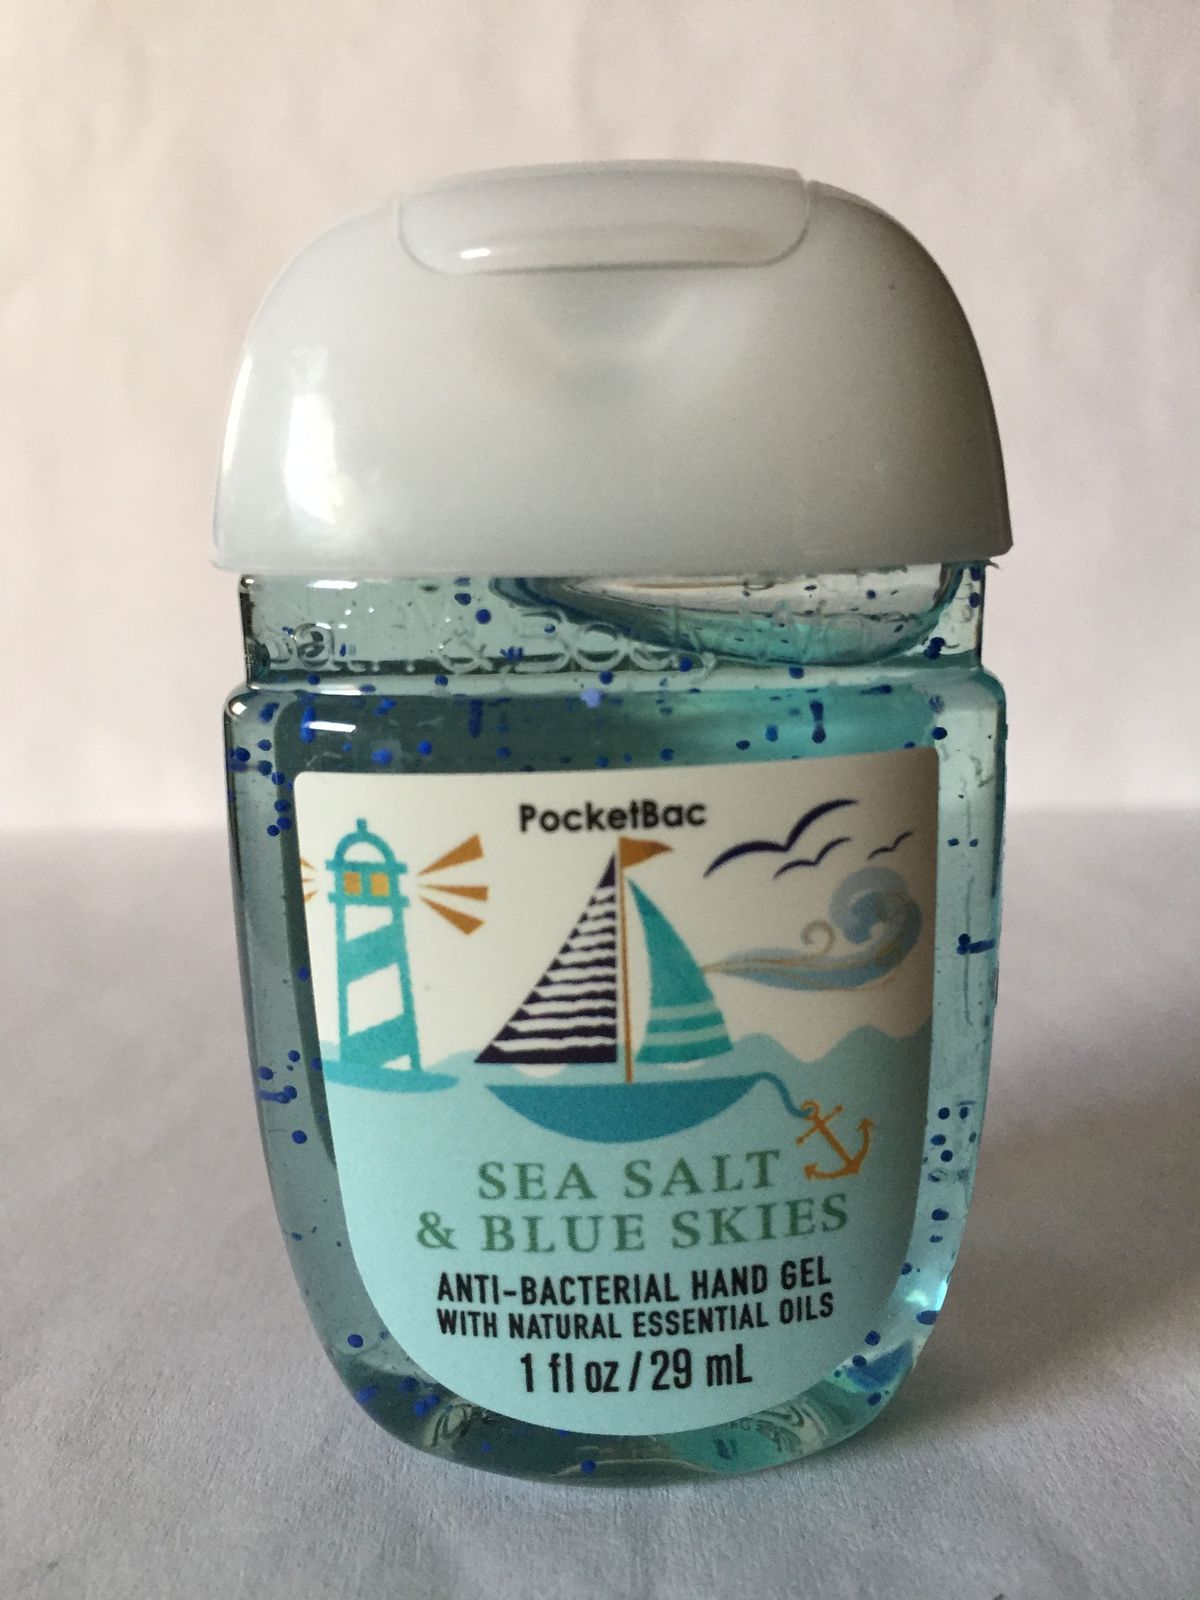 Bath & Body Works SEA SALT & BLUE SKIES Pocketbac Anti-Bacterial Gel *NEW*